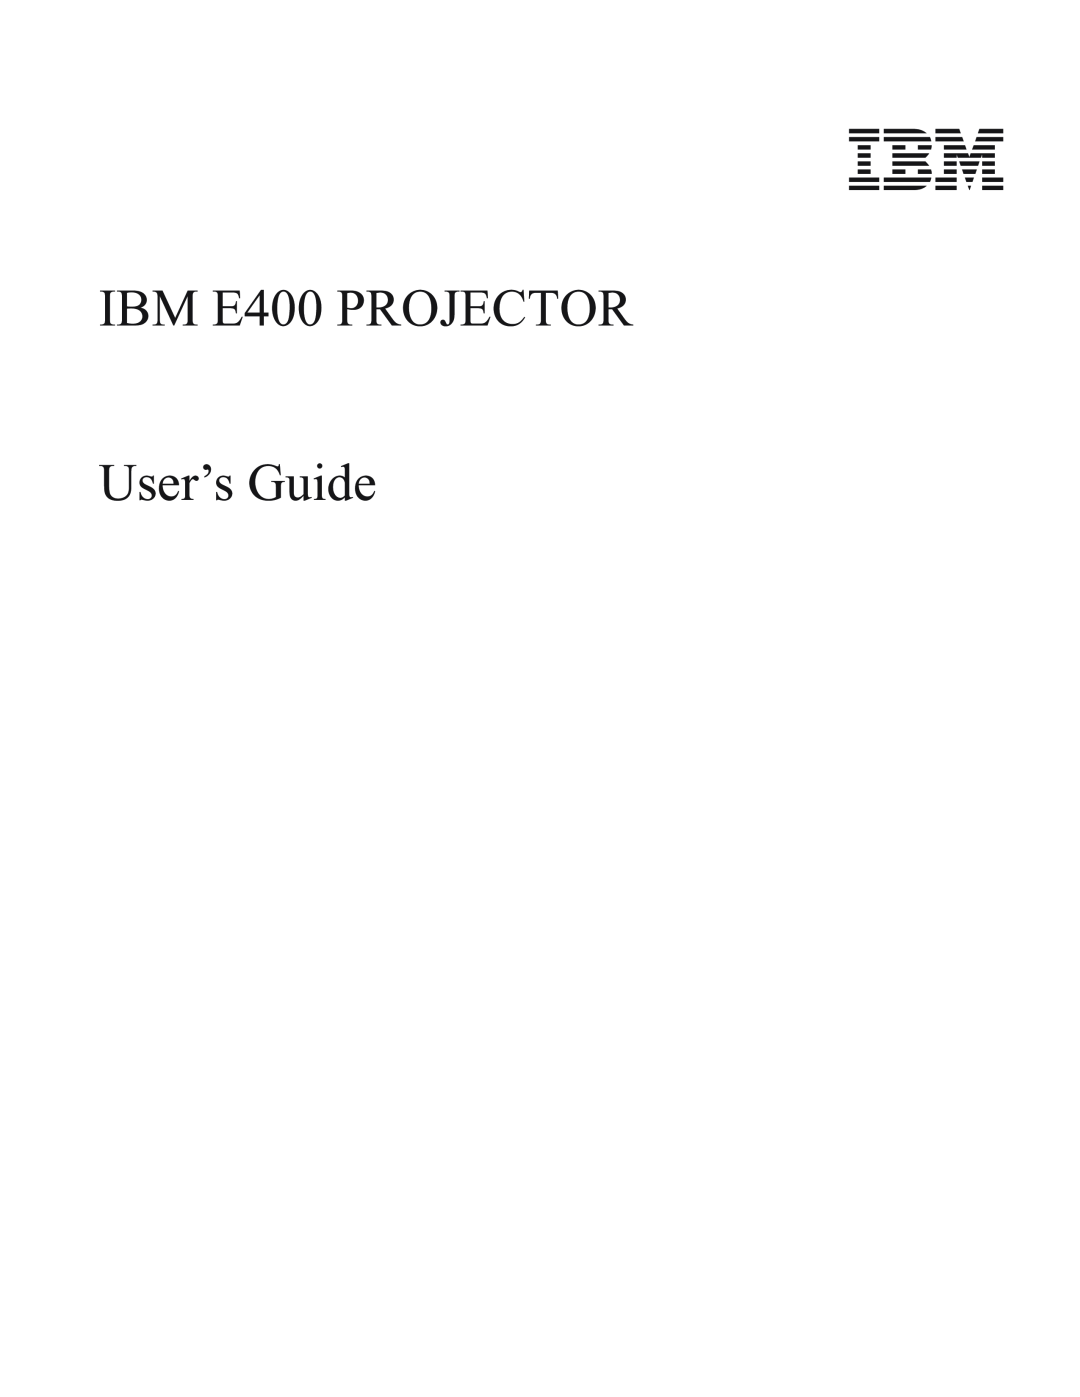 IBM manual IBM E400 PROJECTOR User’s Guide 